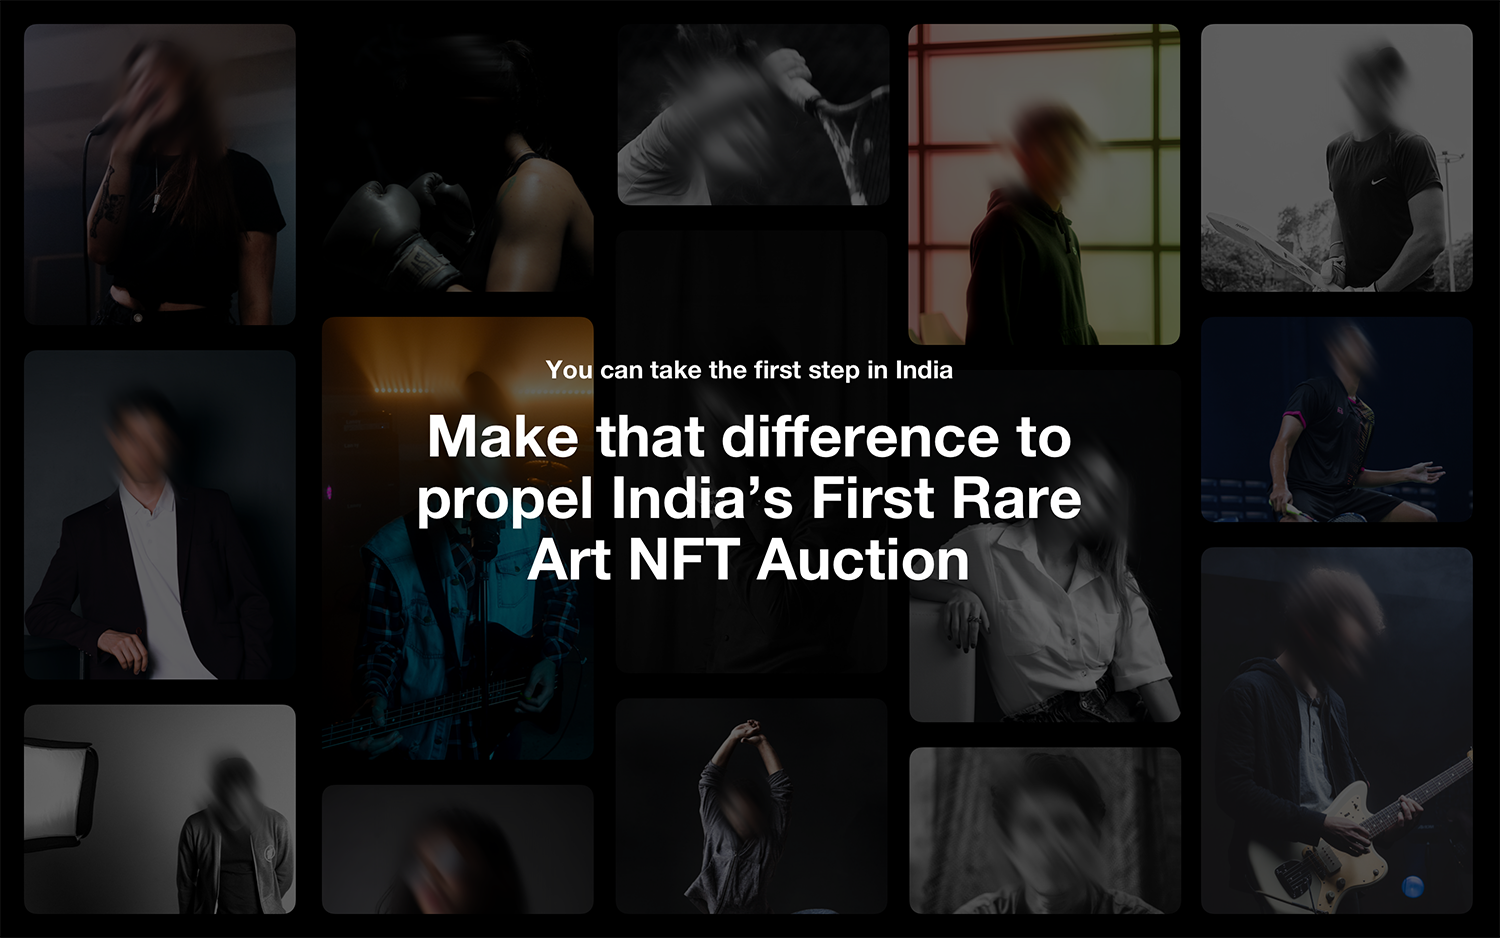 Amitabh Bachchan's NFT - India's First Rare NFT Auction Platform